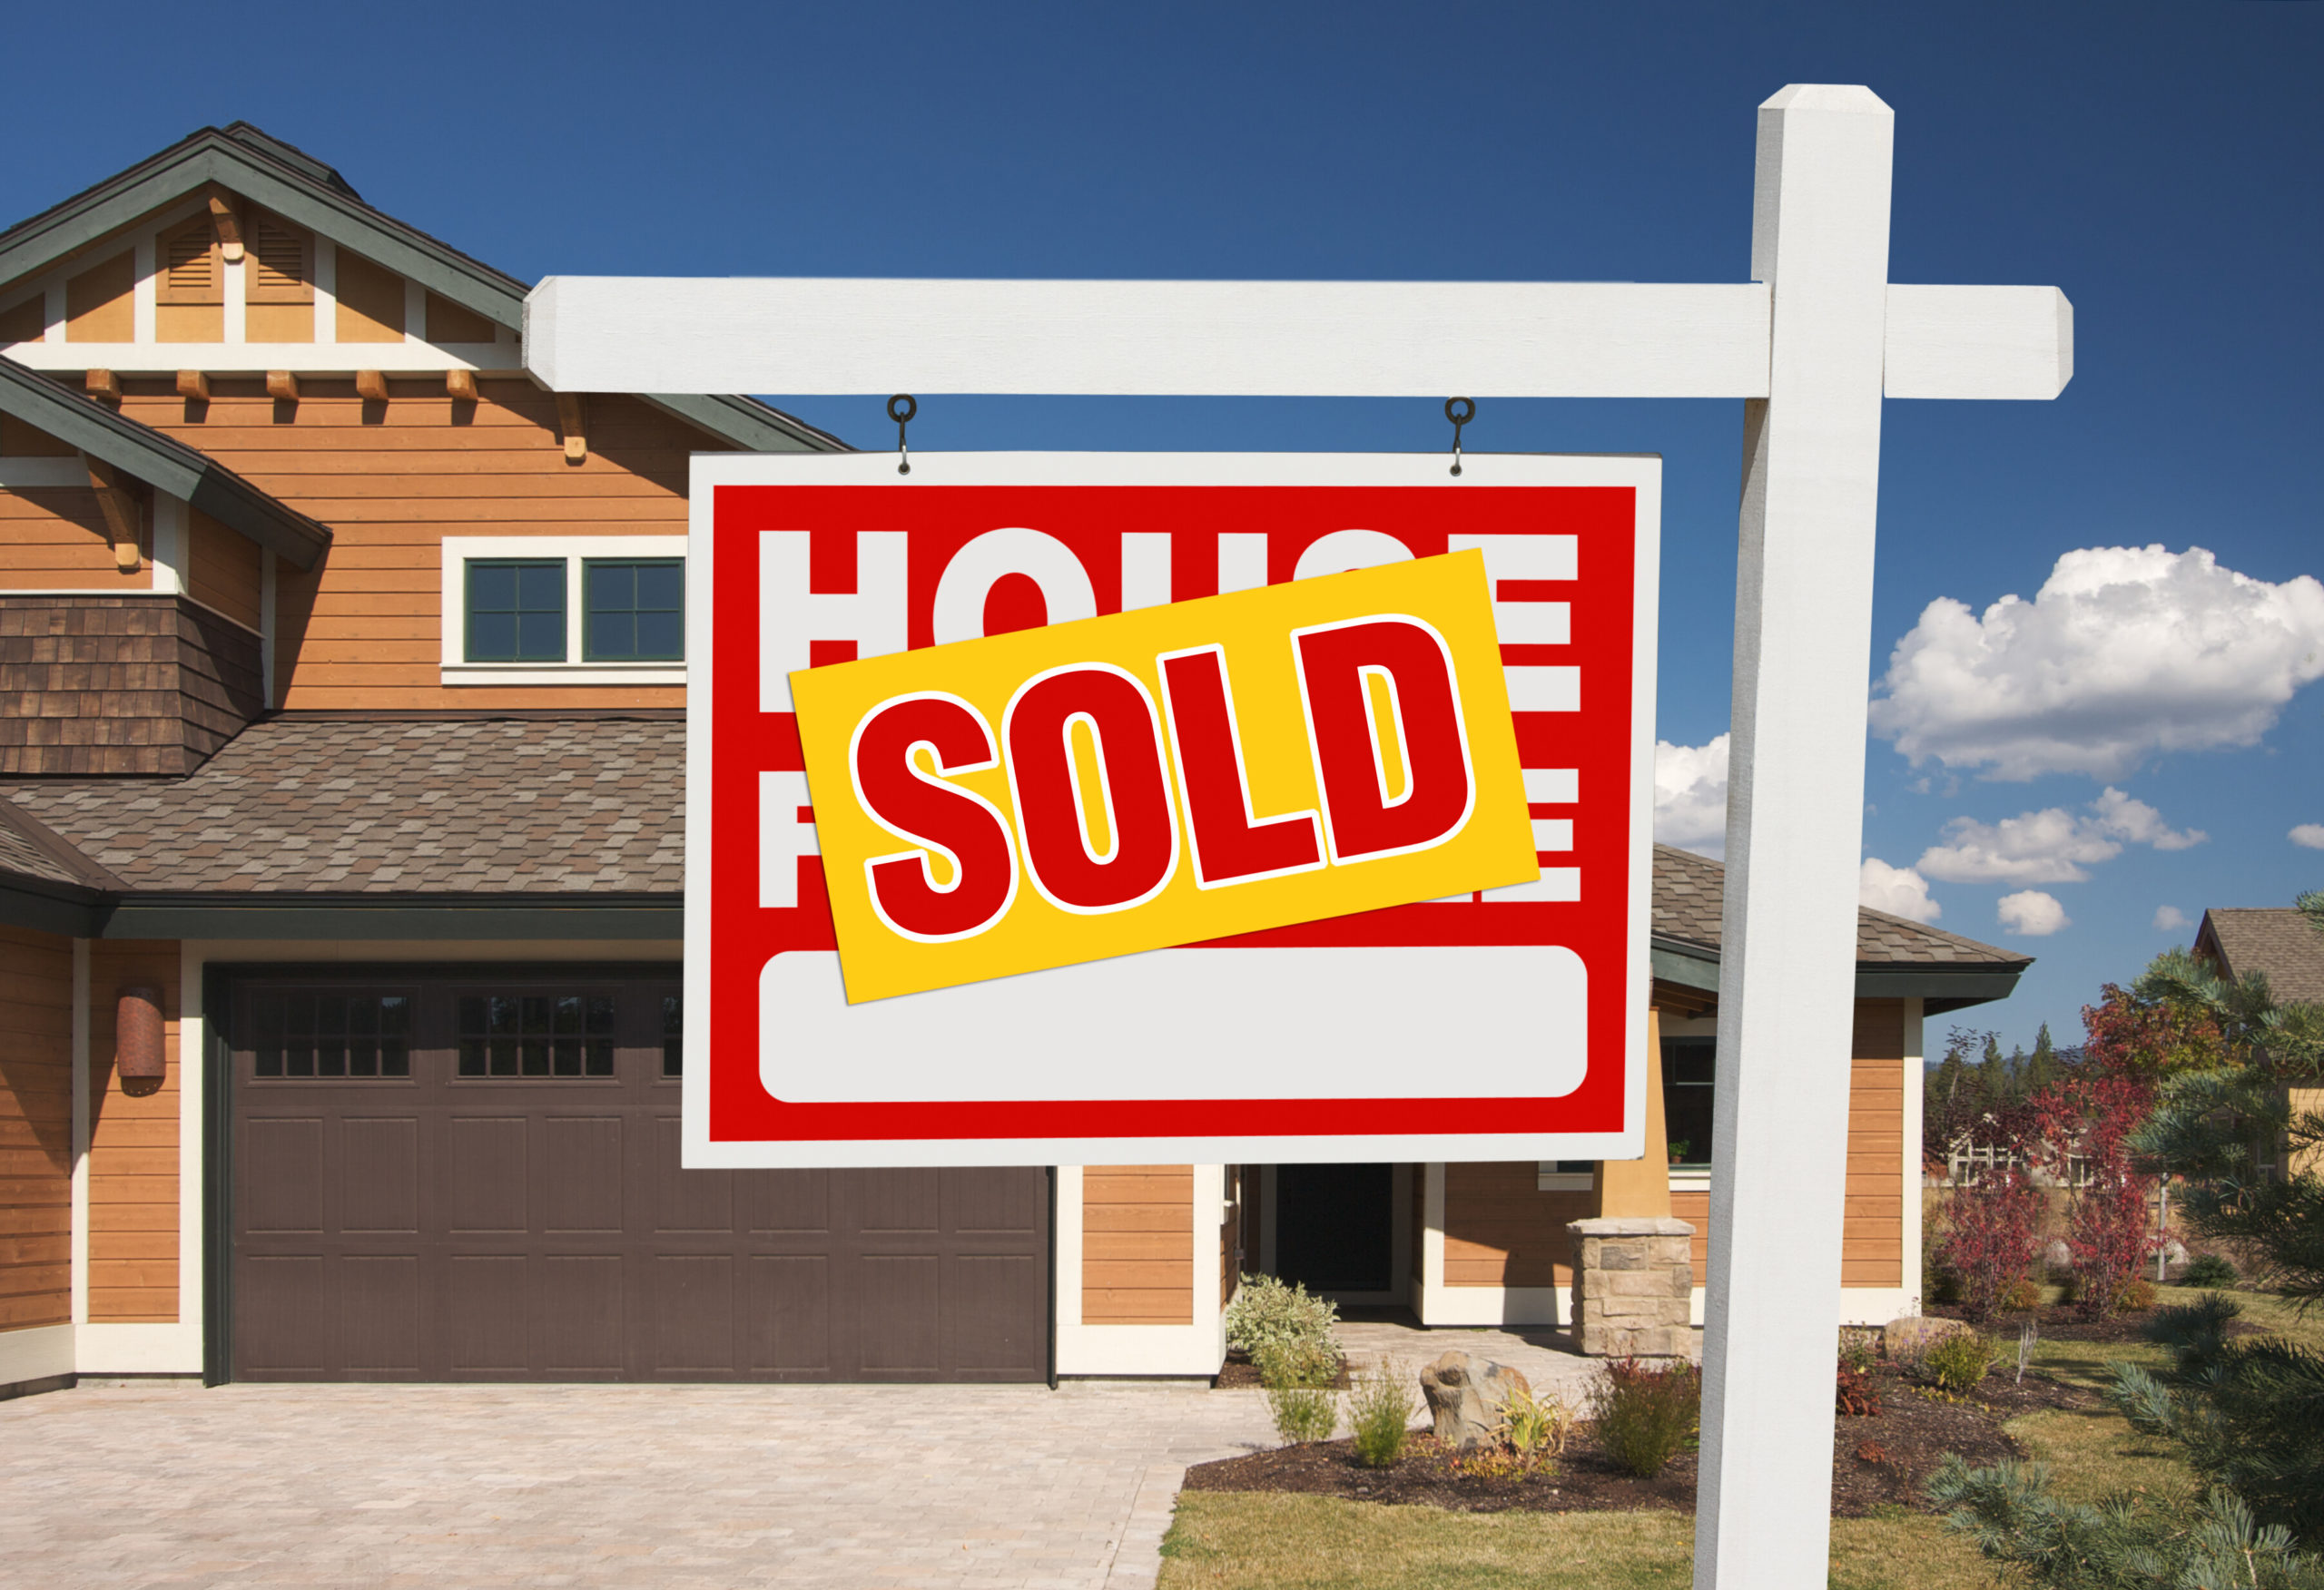 Home sales down in Huron Perth